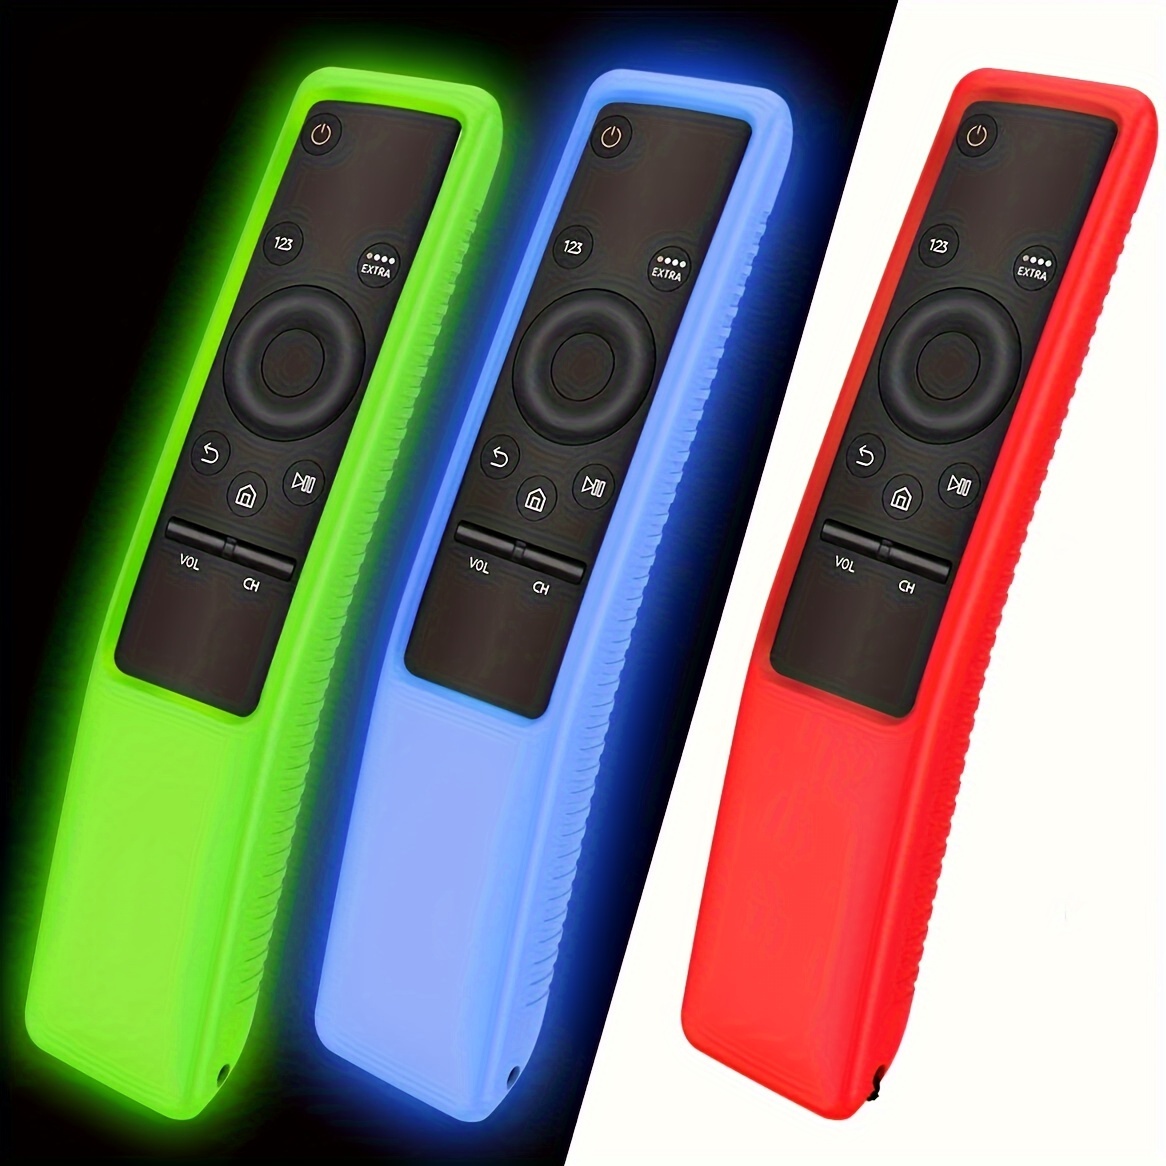  Paquete de 2 fundas para mando a distancia para Samsung TV,  LED, LCD, HD, TV, 3D, Smart TV, BN59-01199F, BN59-01315A, color rojo y azul  : Electrónica